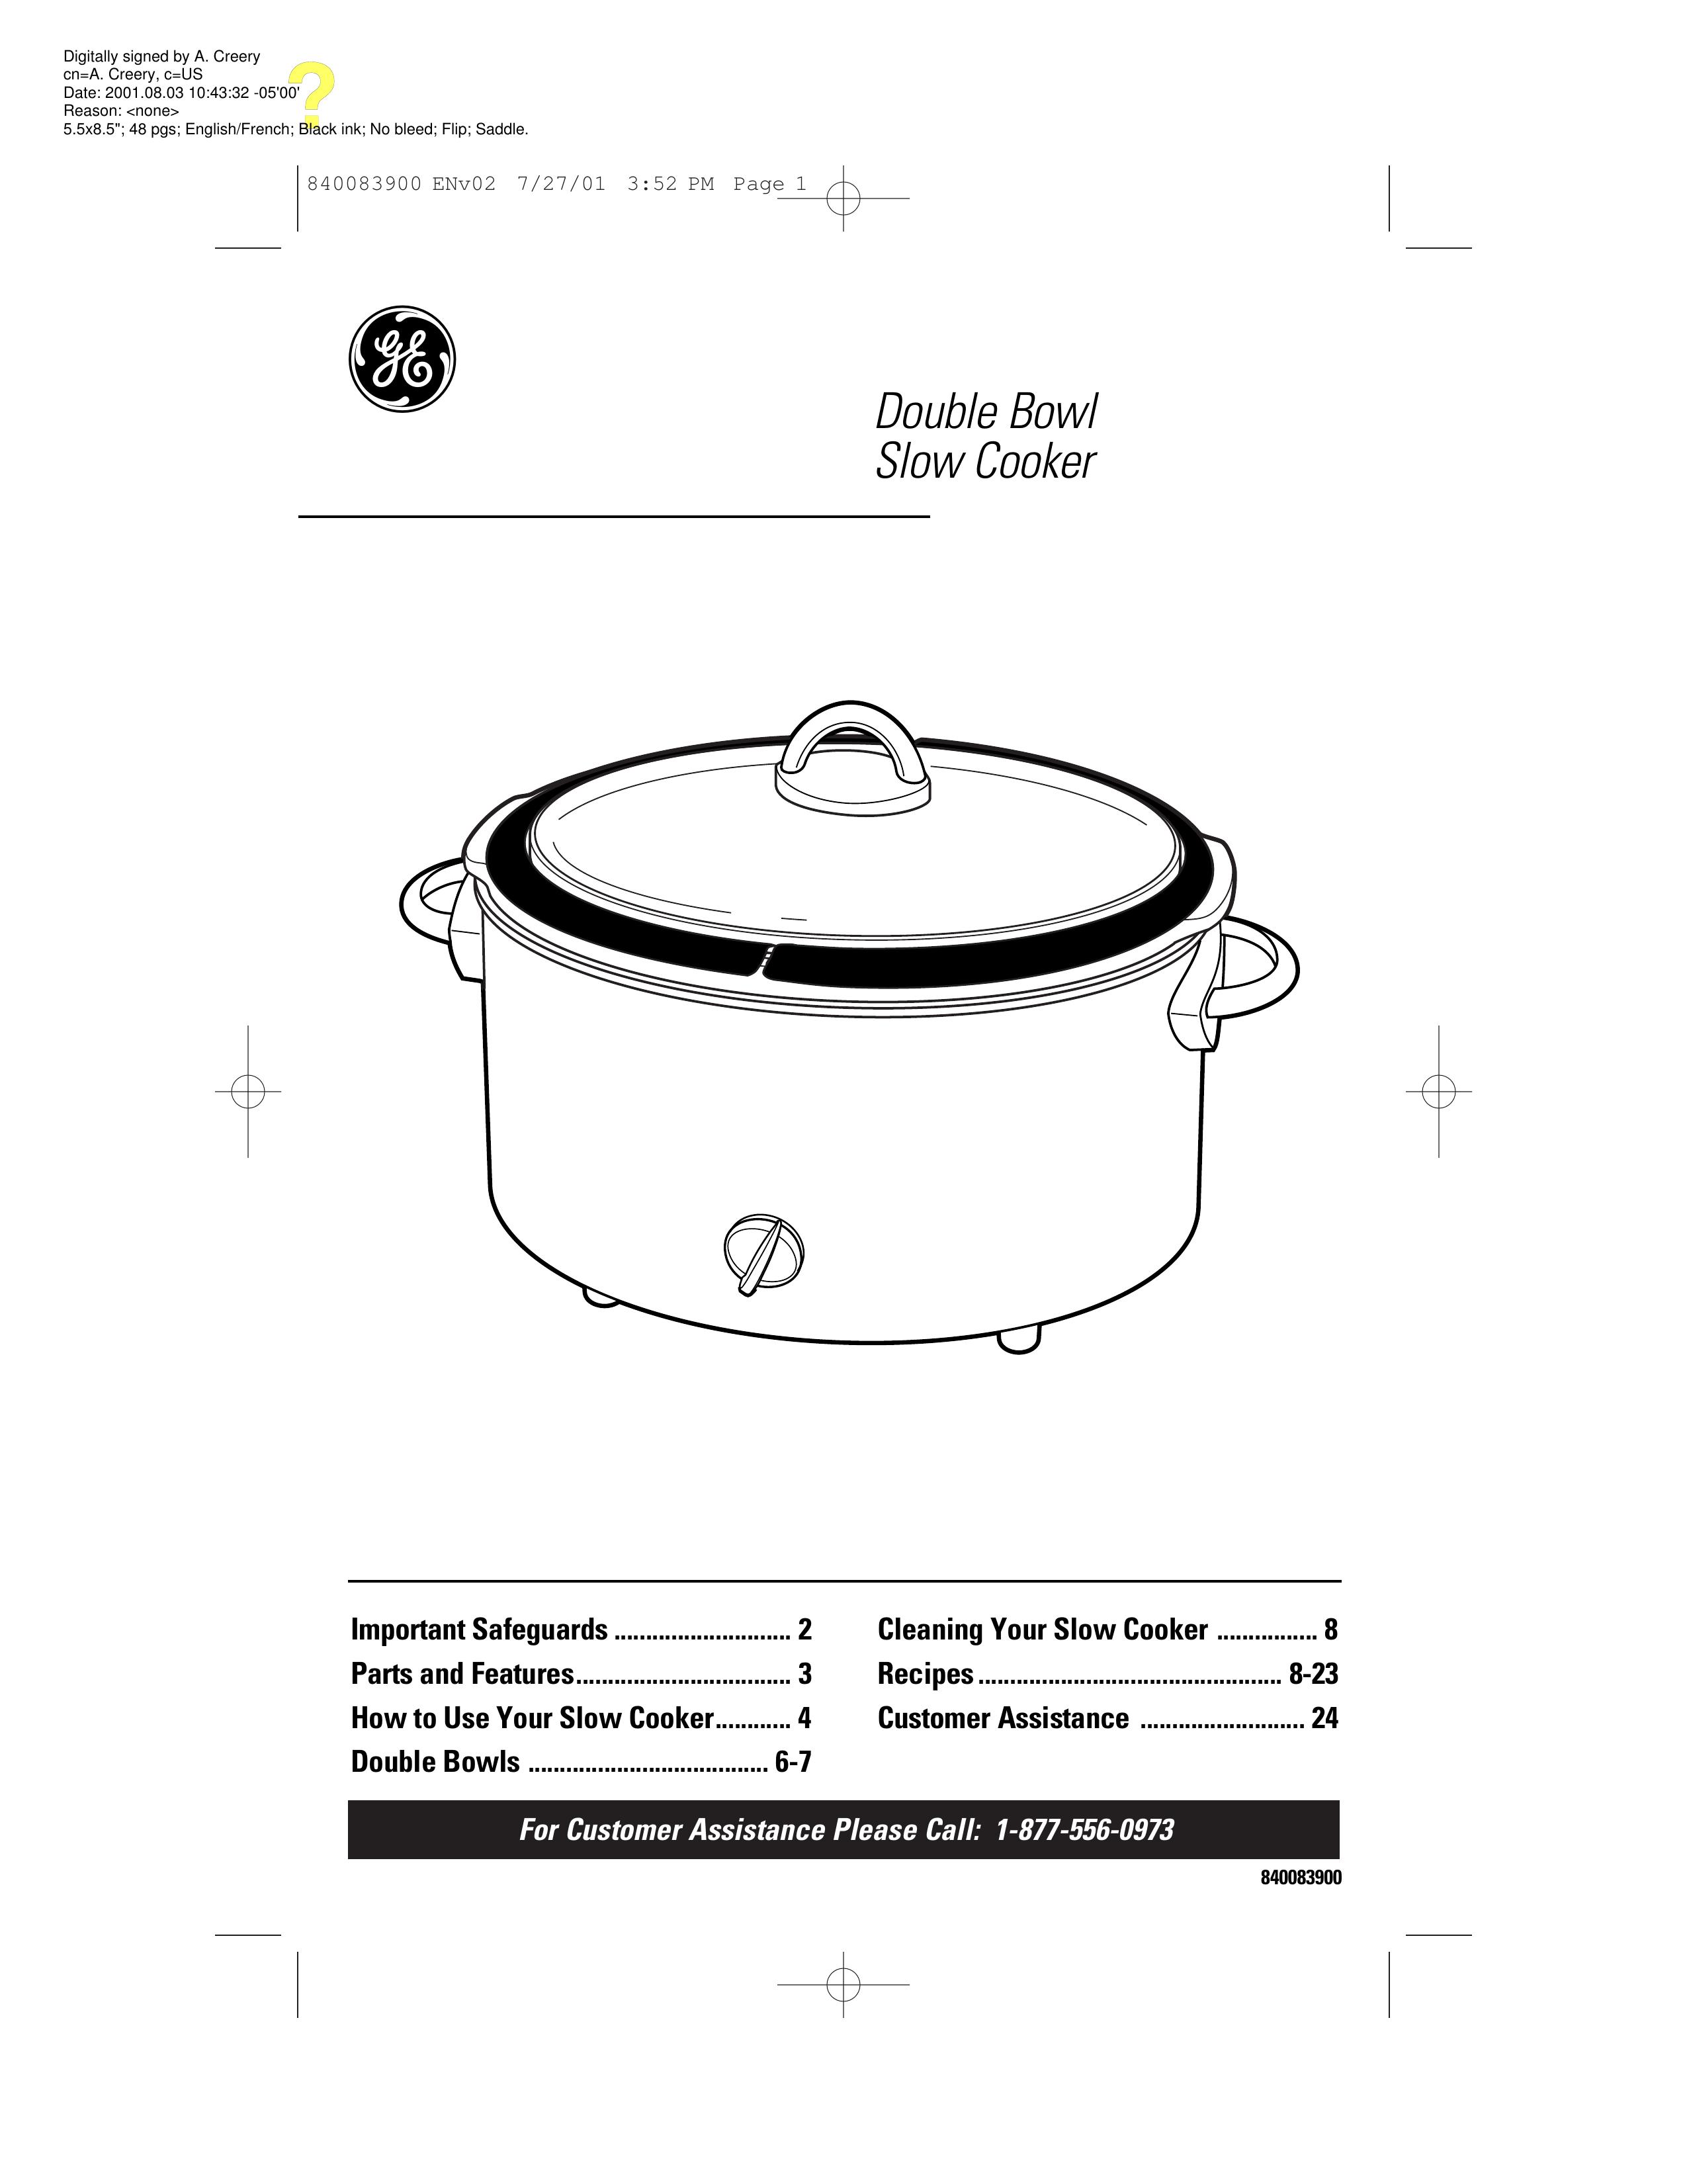 GE 106828 Slow Cooker User Manual